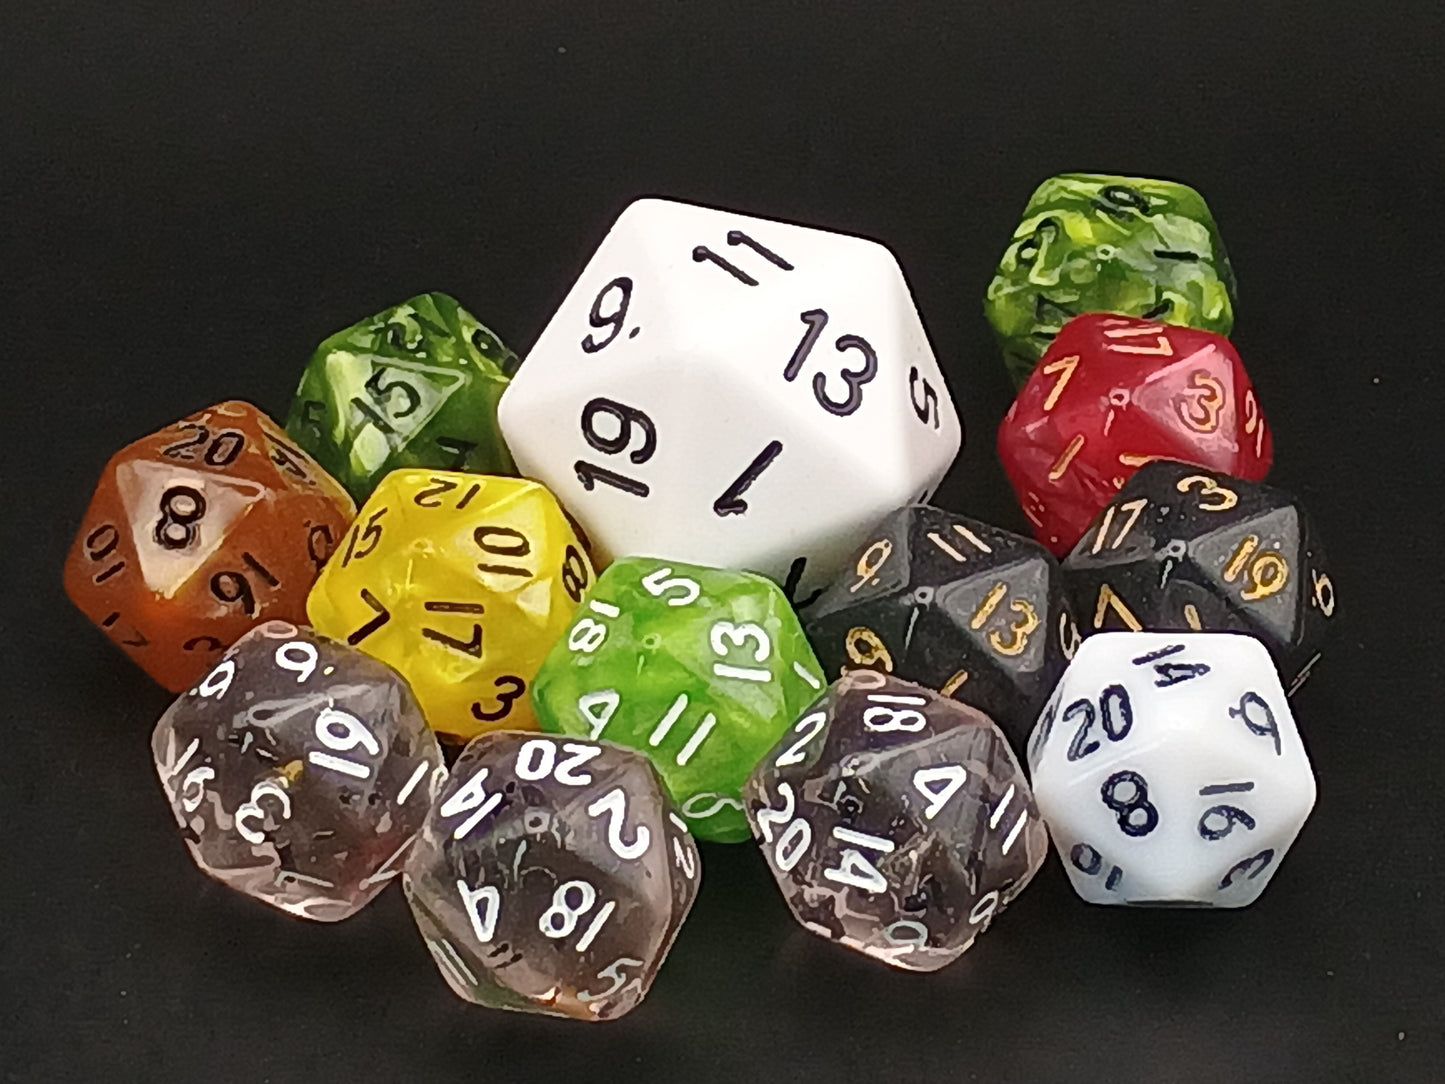 Set of 12 20-sided mini dice